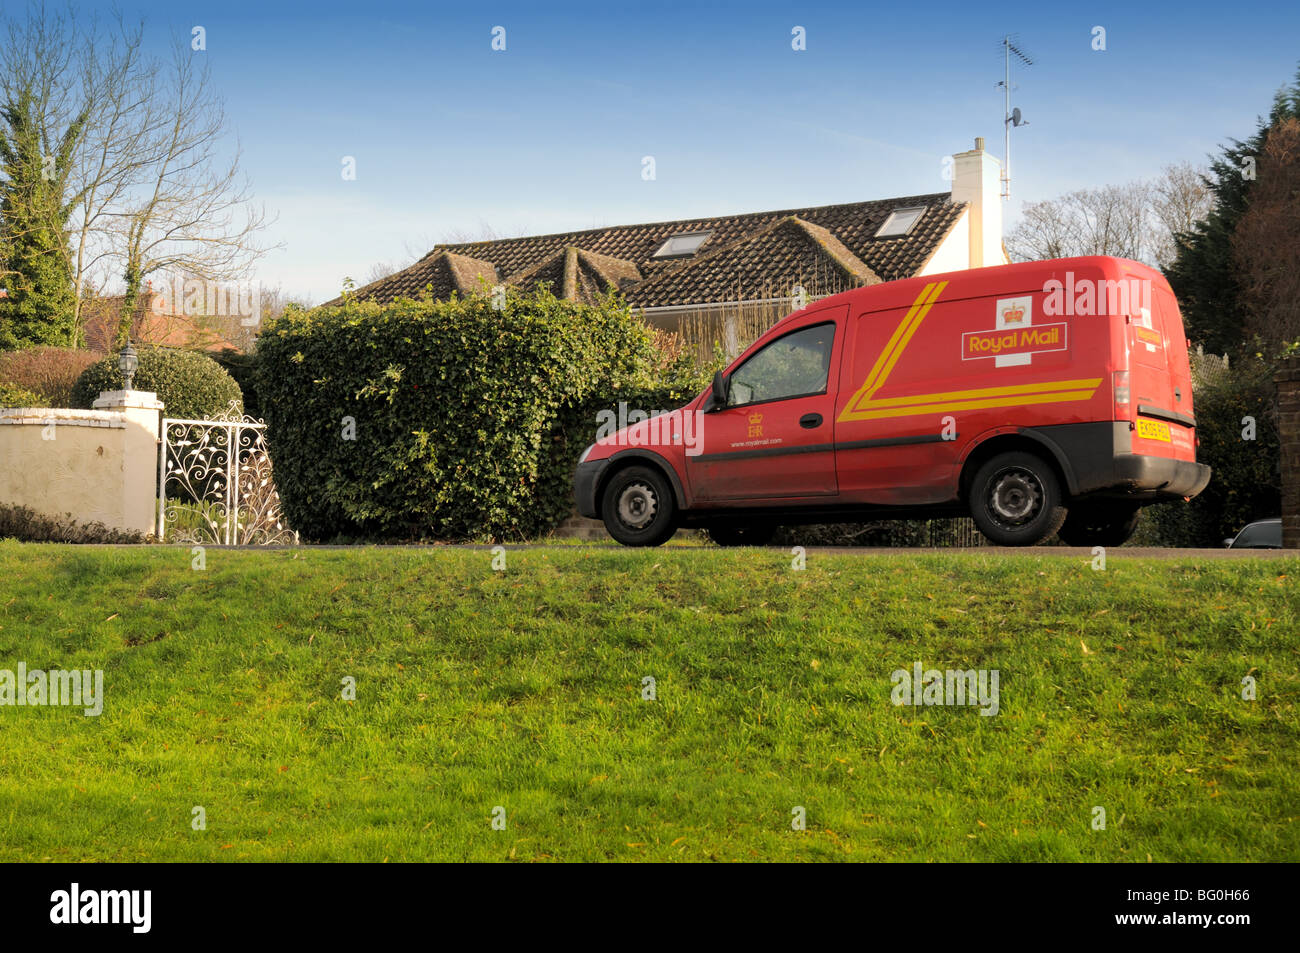 Royal Mail Post van außerhalb eines Hauses England UK geparkt Stockfoto